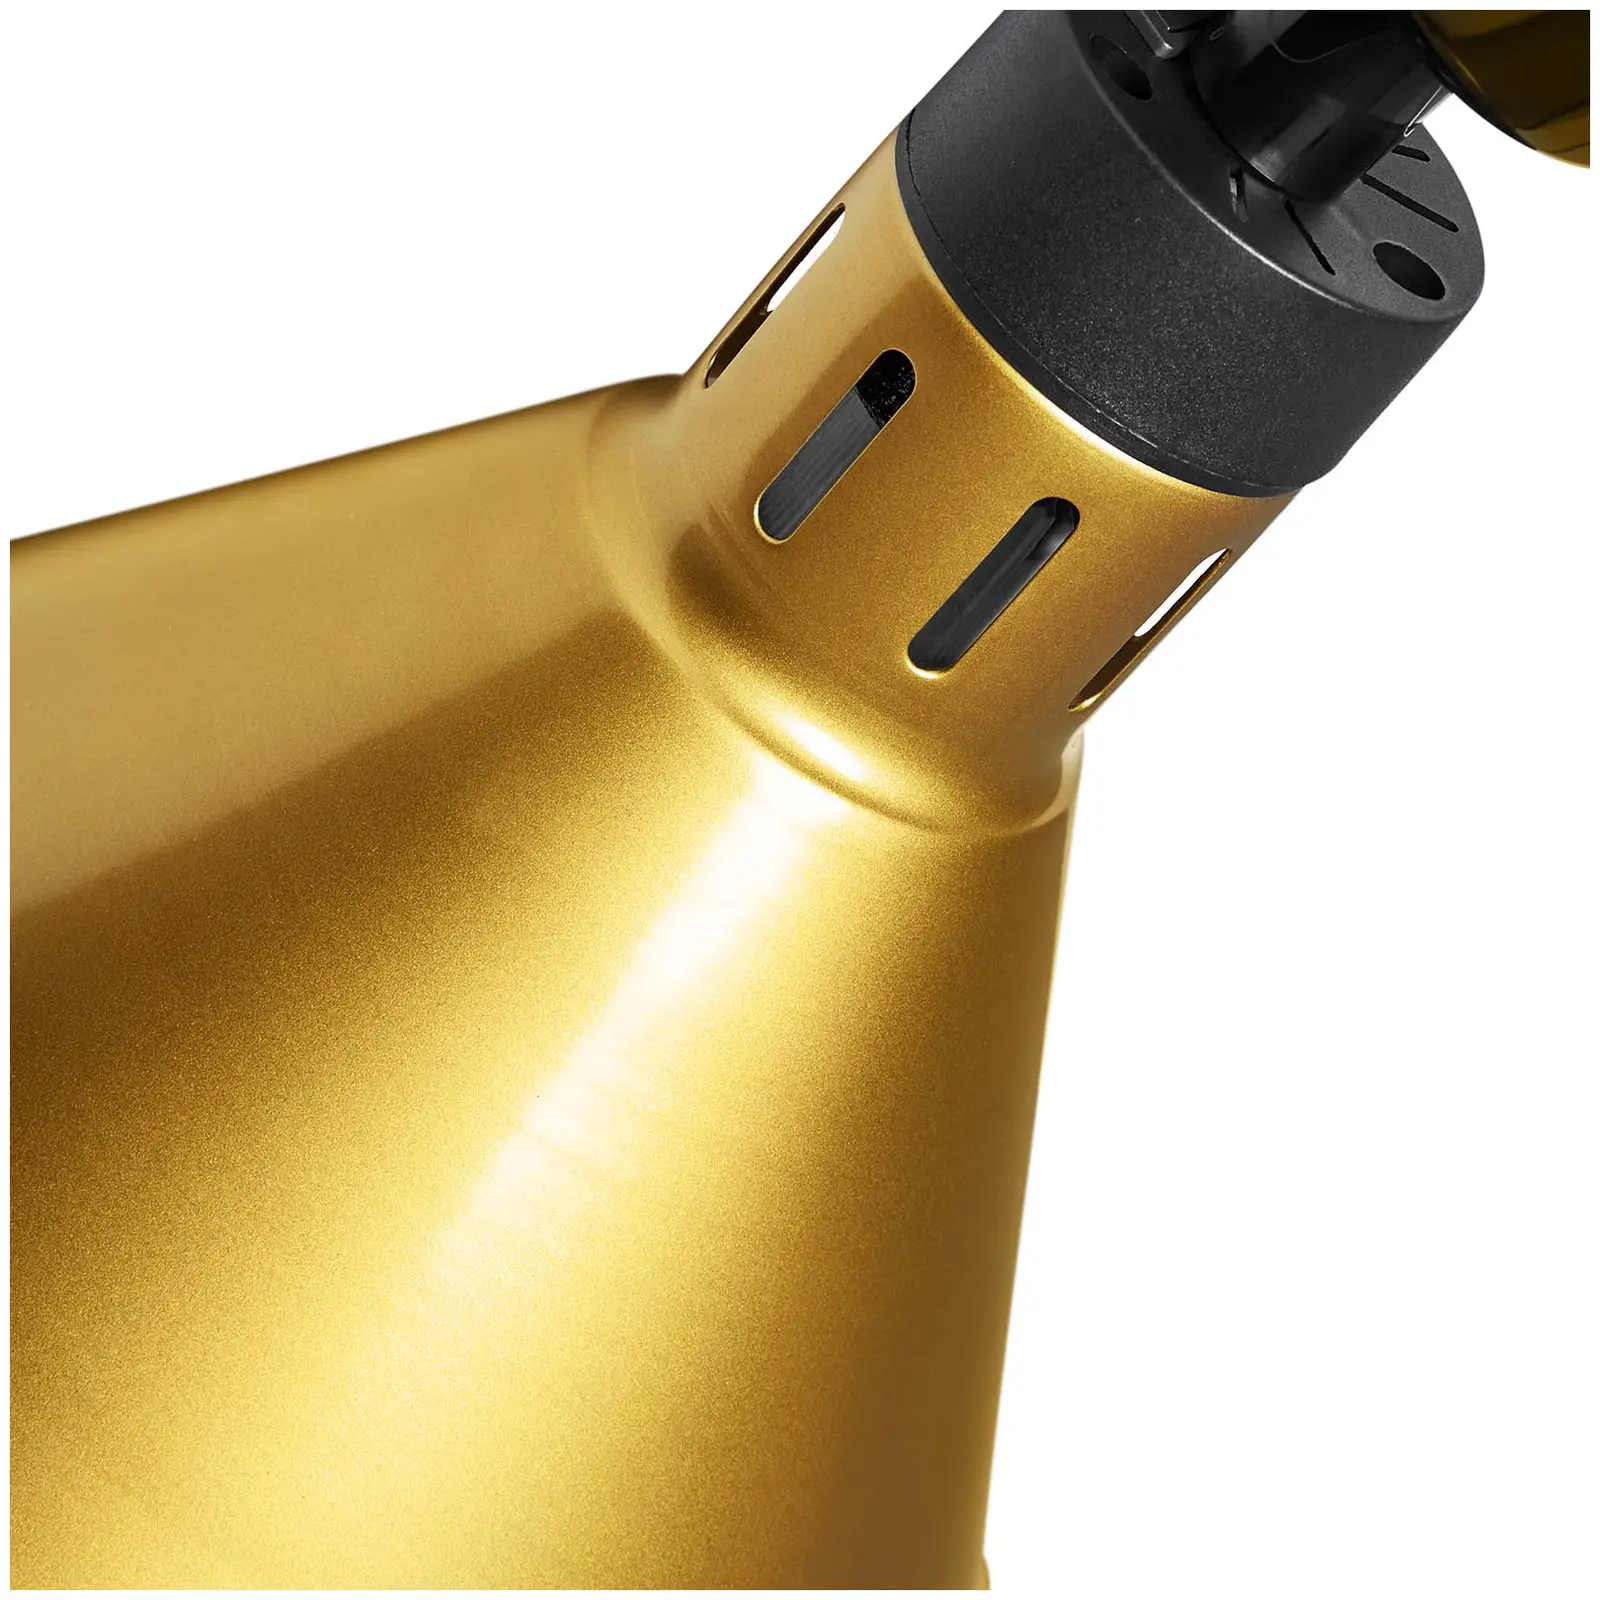 Lampada riscaldante - oro pallido - 27 x 27 x 31 cm  - acciaio - regolabile in altezza